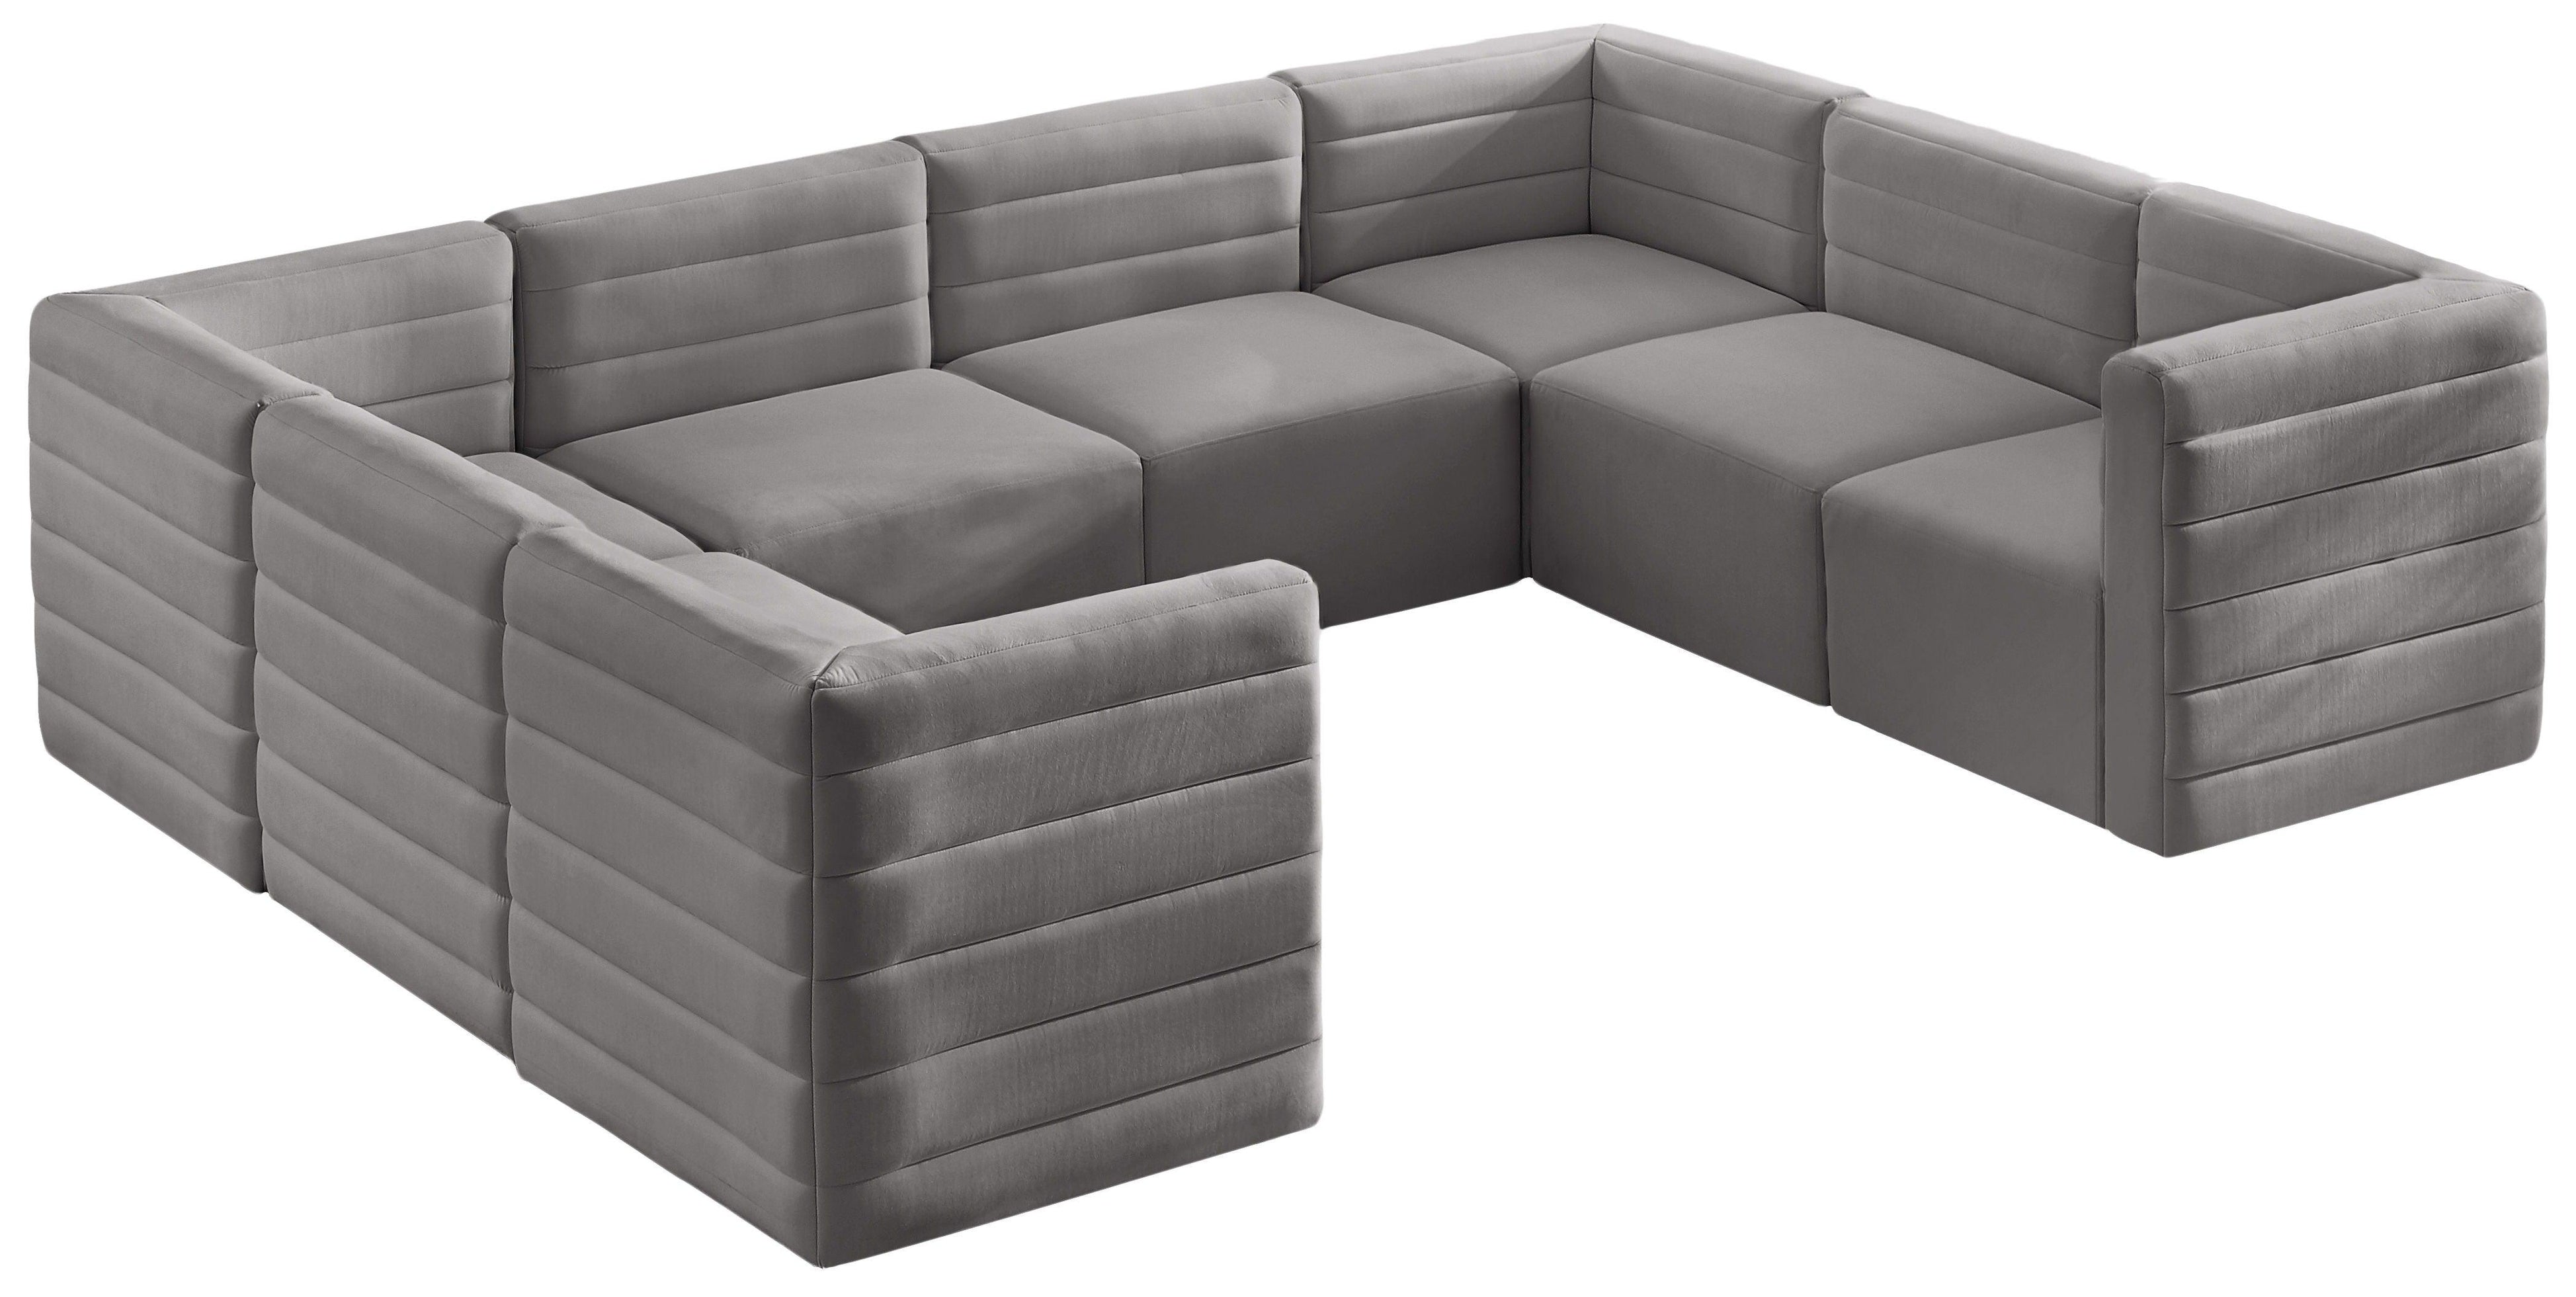 Meridian Furniture - Quincy - Modular Sectional - 5th Avenue Furniture